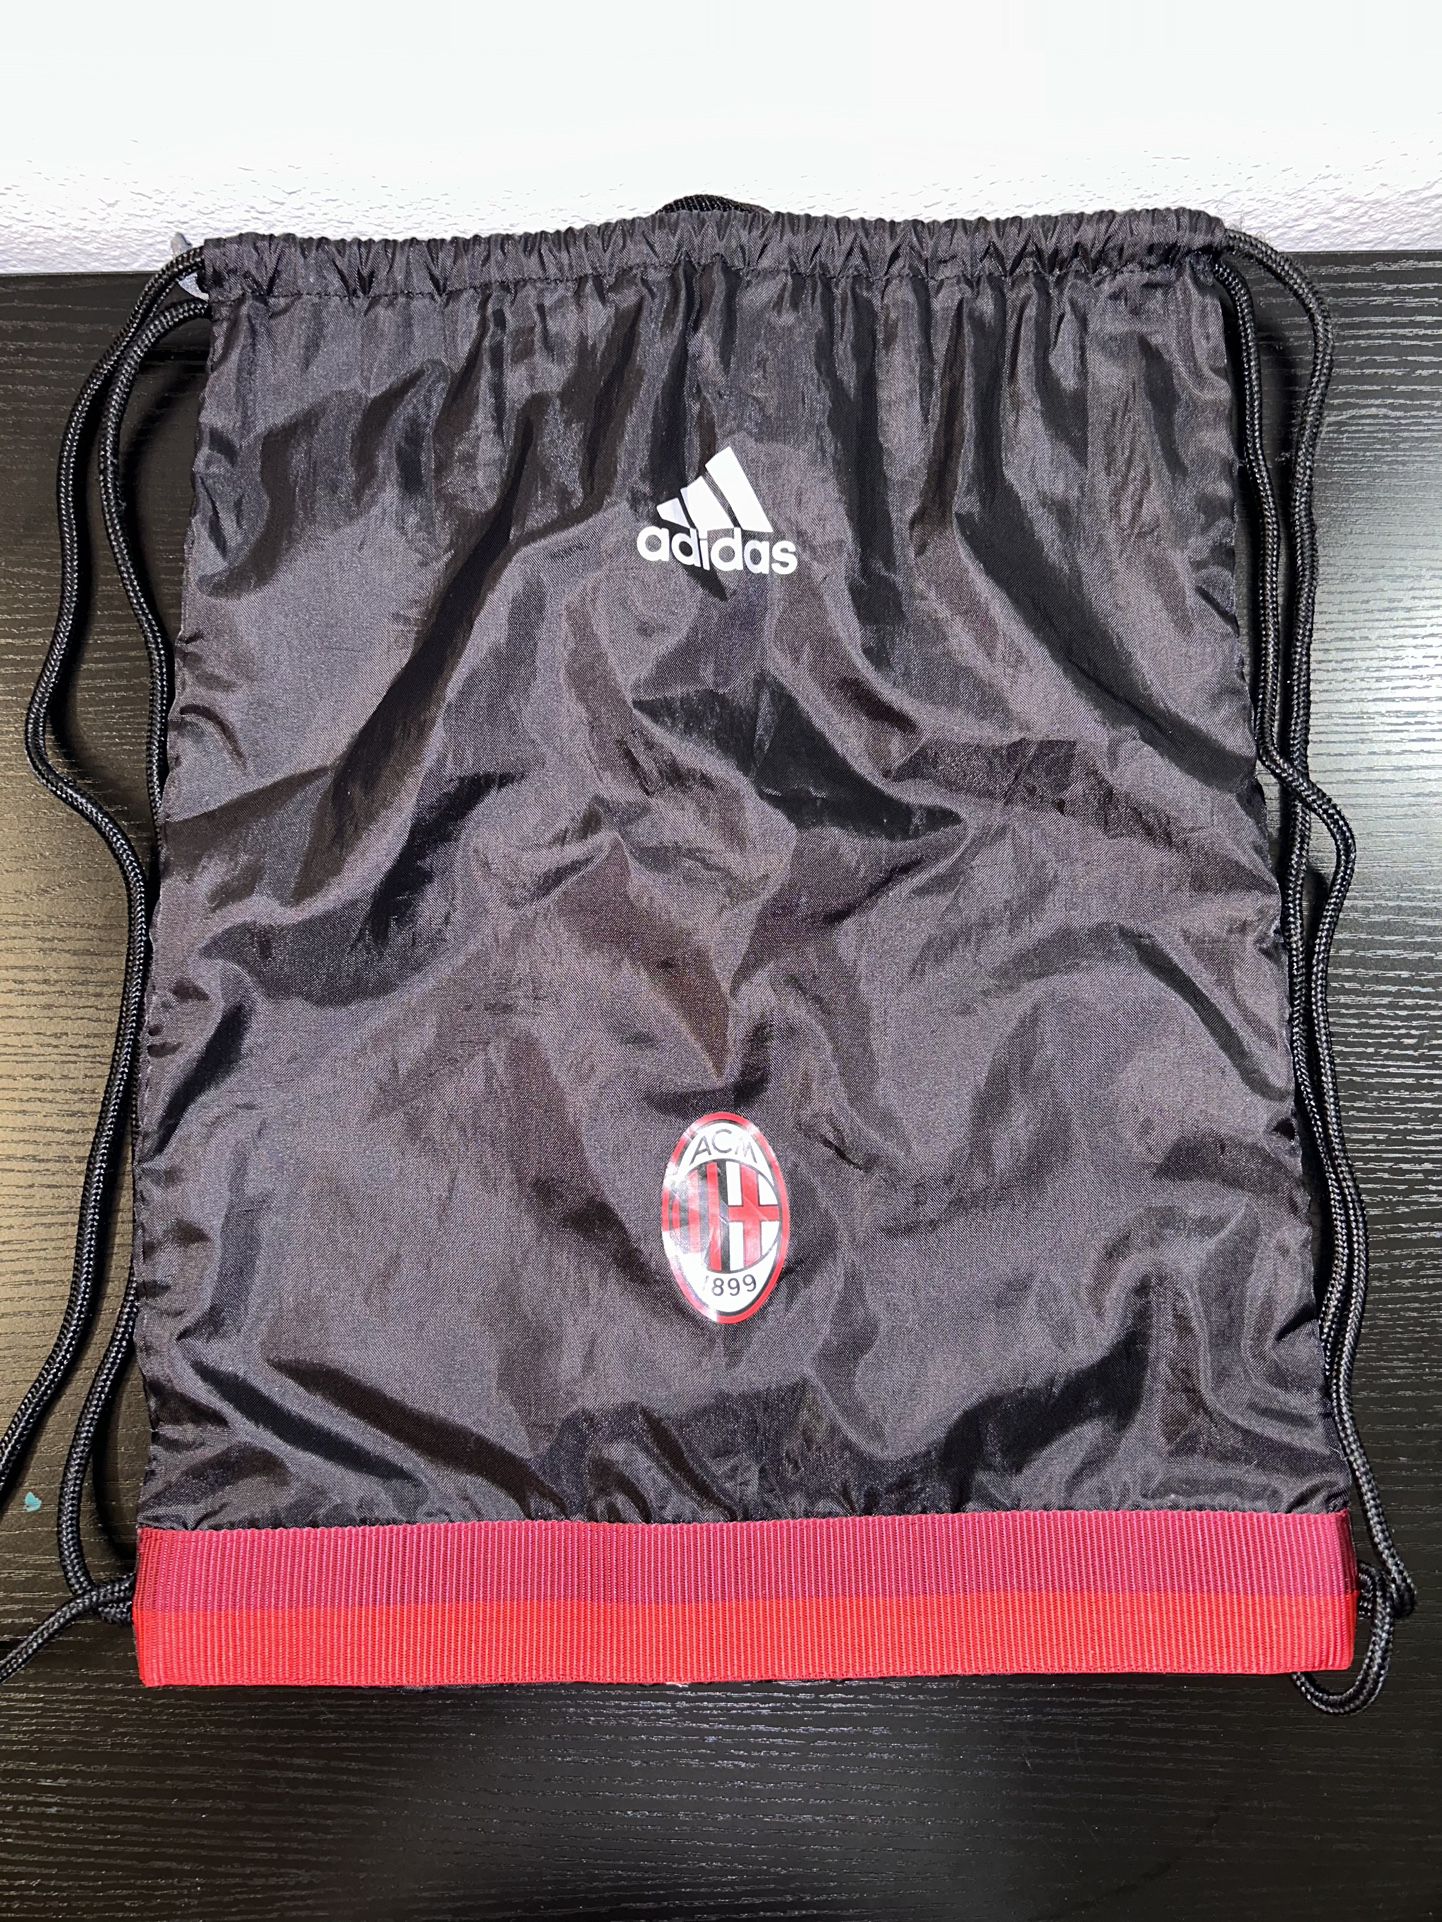 4700/191 ADIDAS AC Milan Bag Football Shoe Bag Snack Bag 15 X 19” Black Men’s